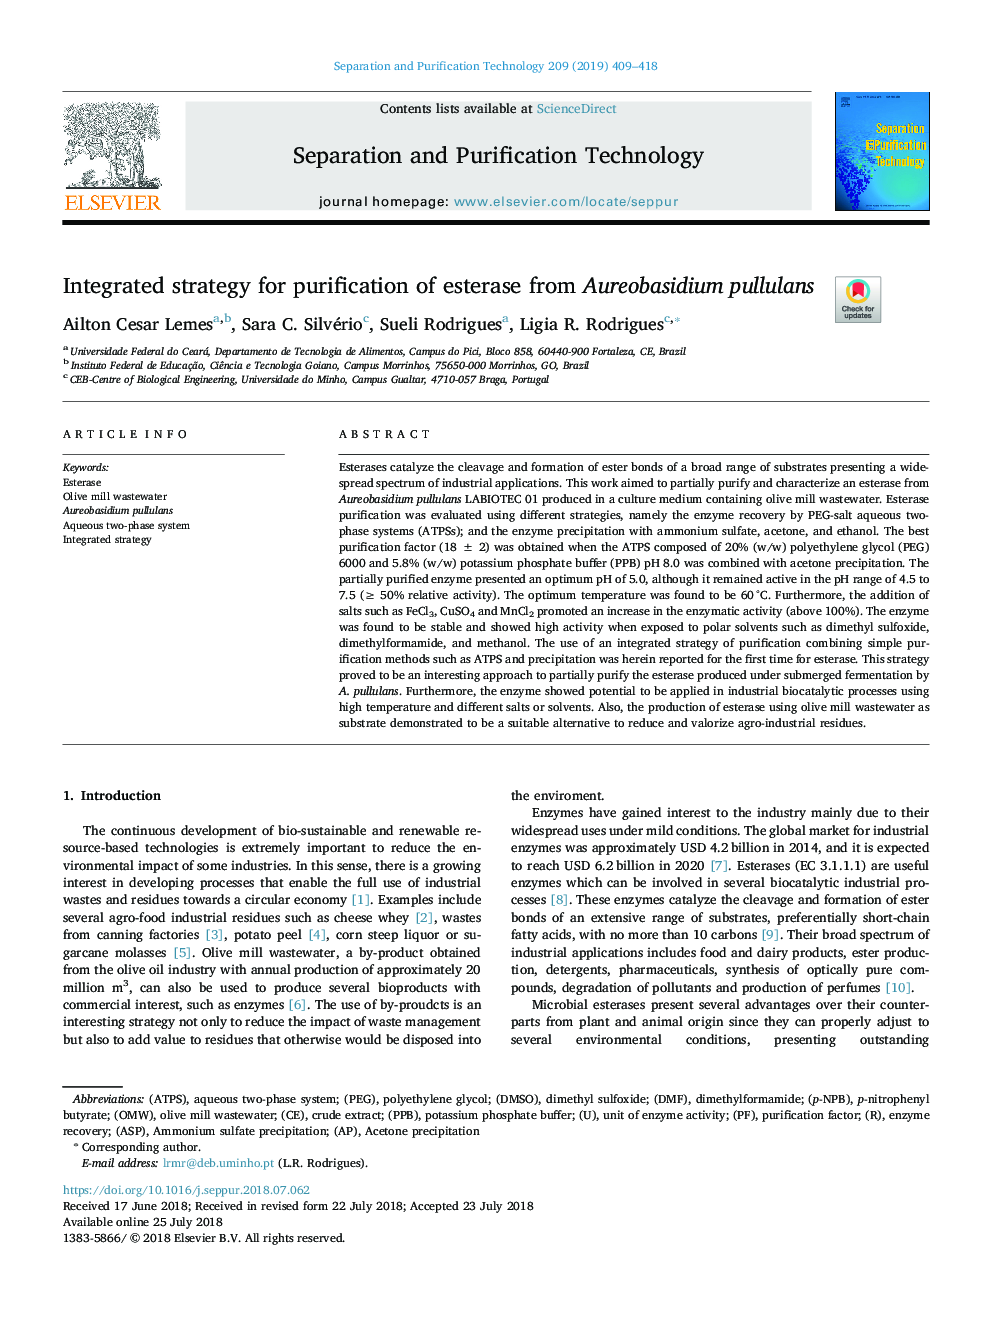 Integrated strategy for purification of esterase from Aureobasidium pullulans